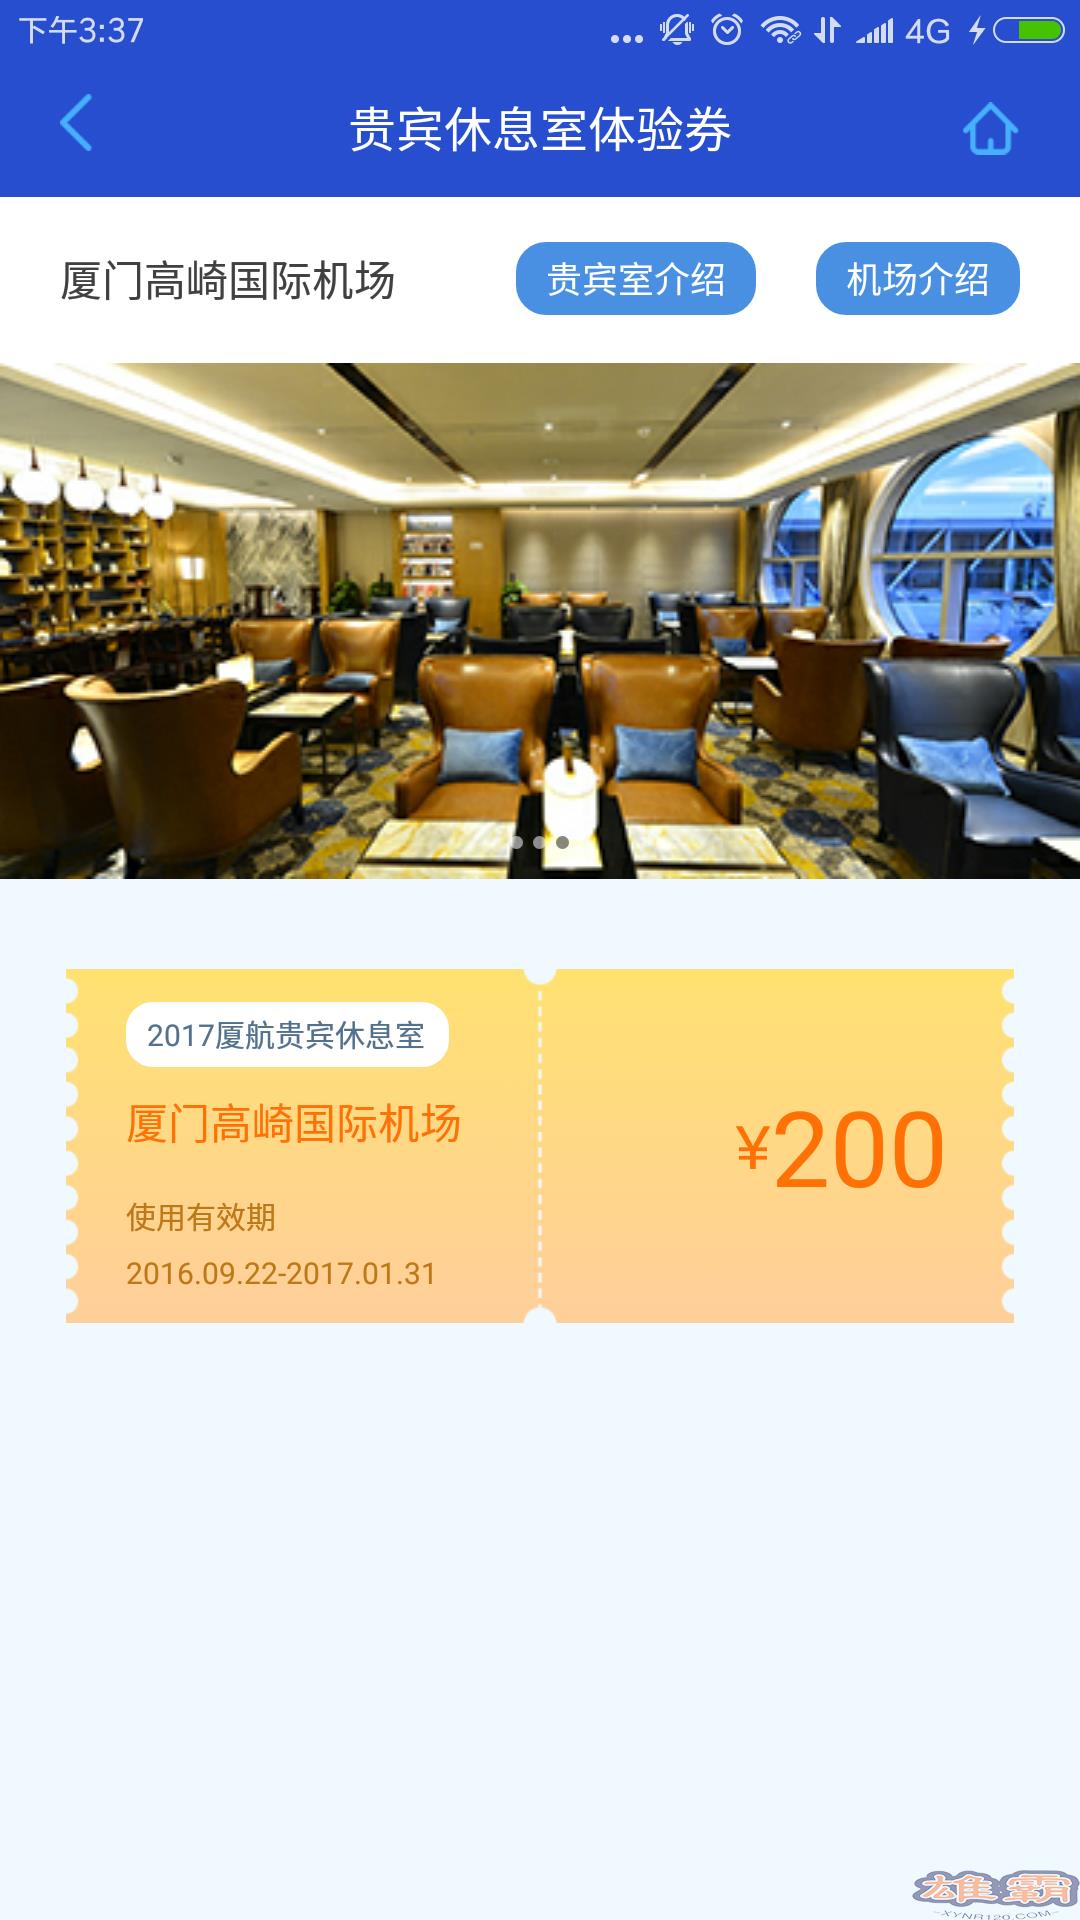 Hạ Môn Airlines E Lufei